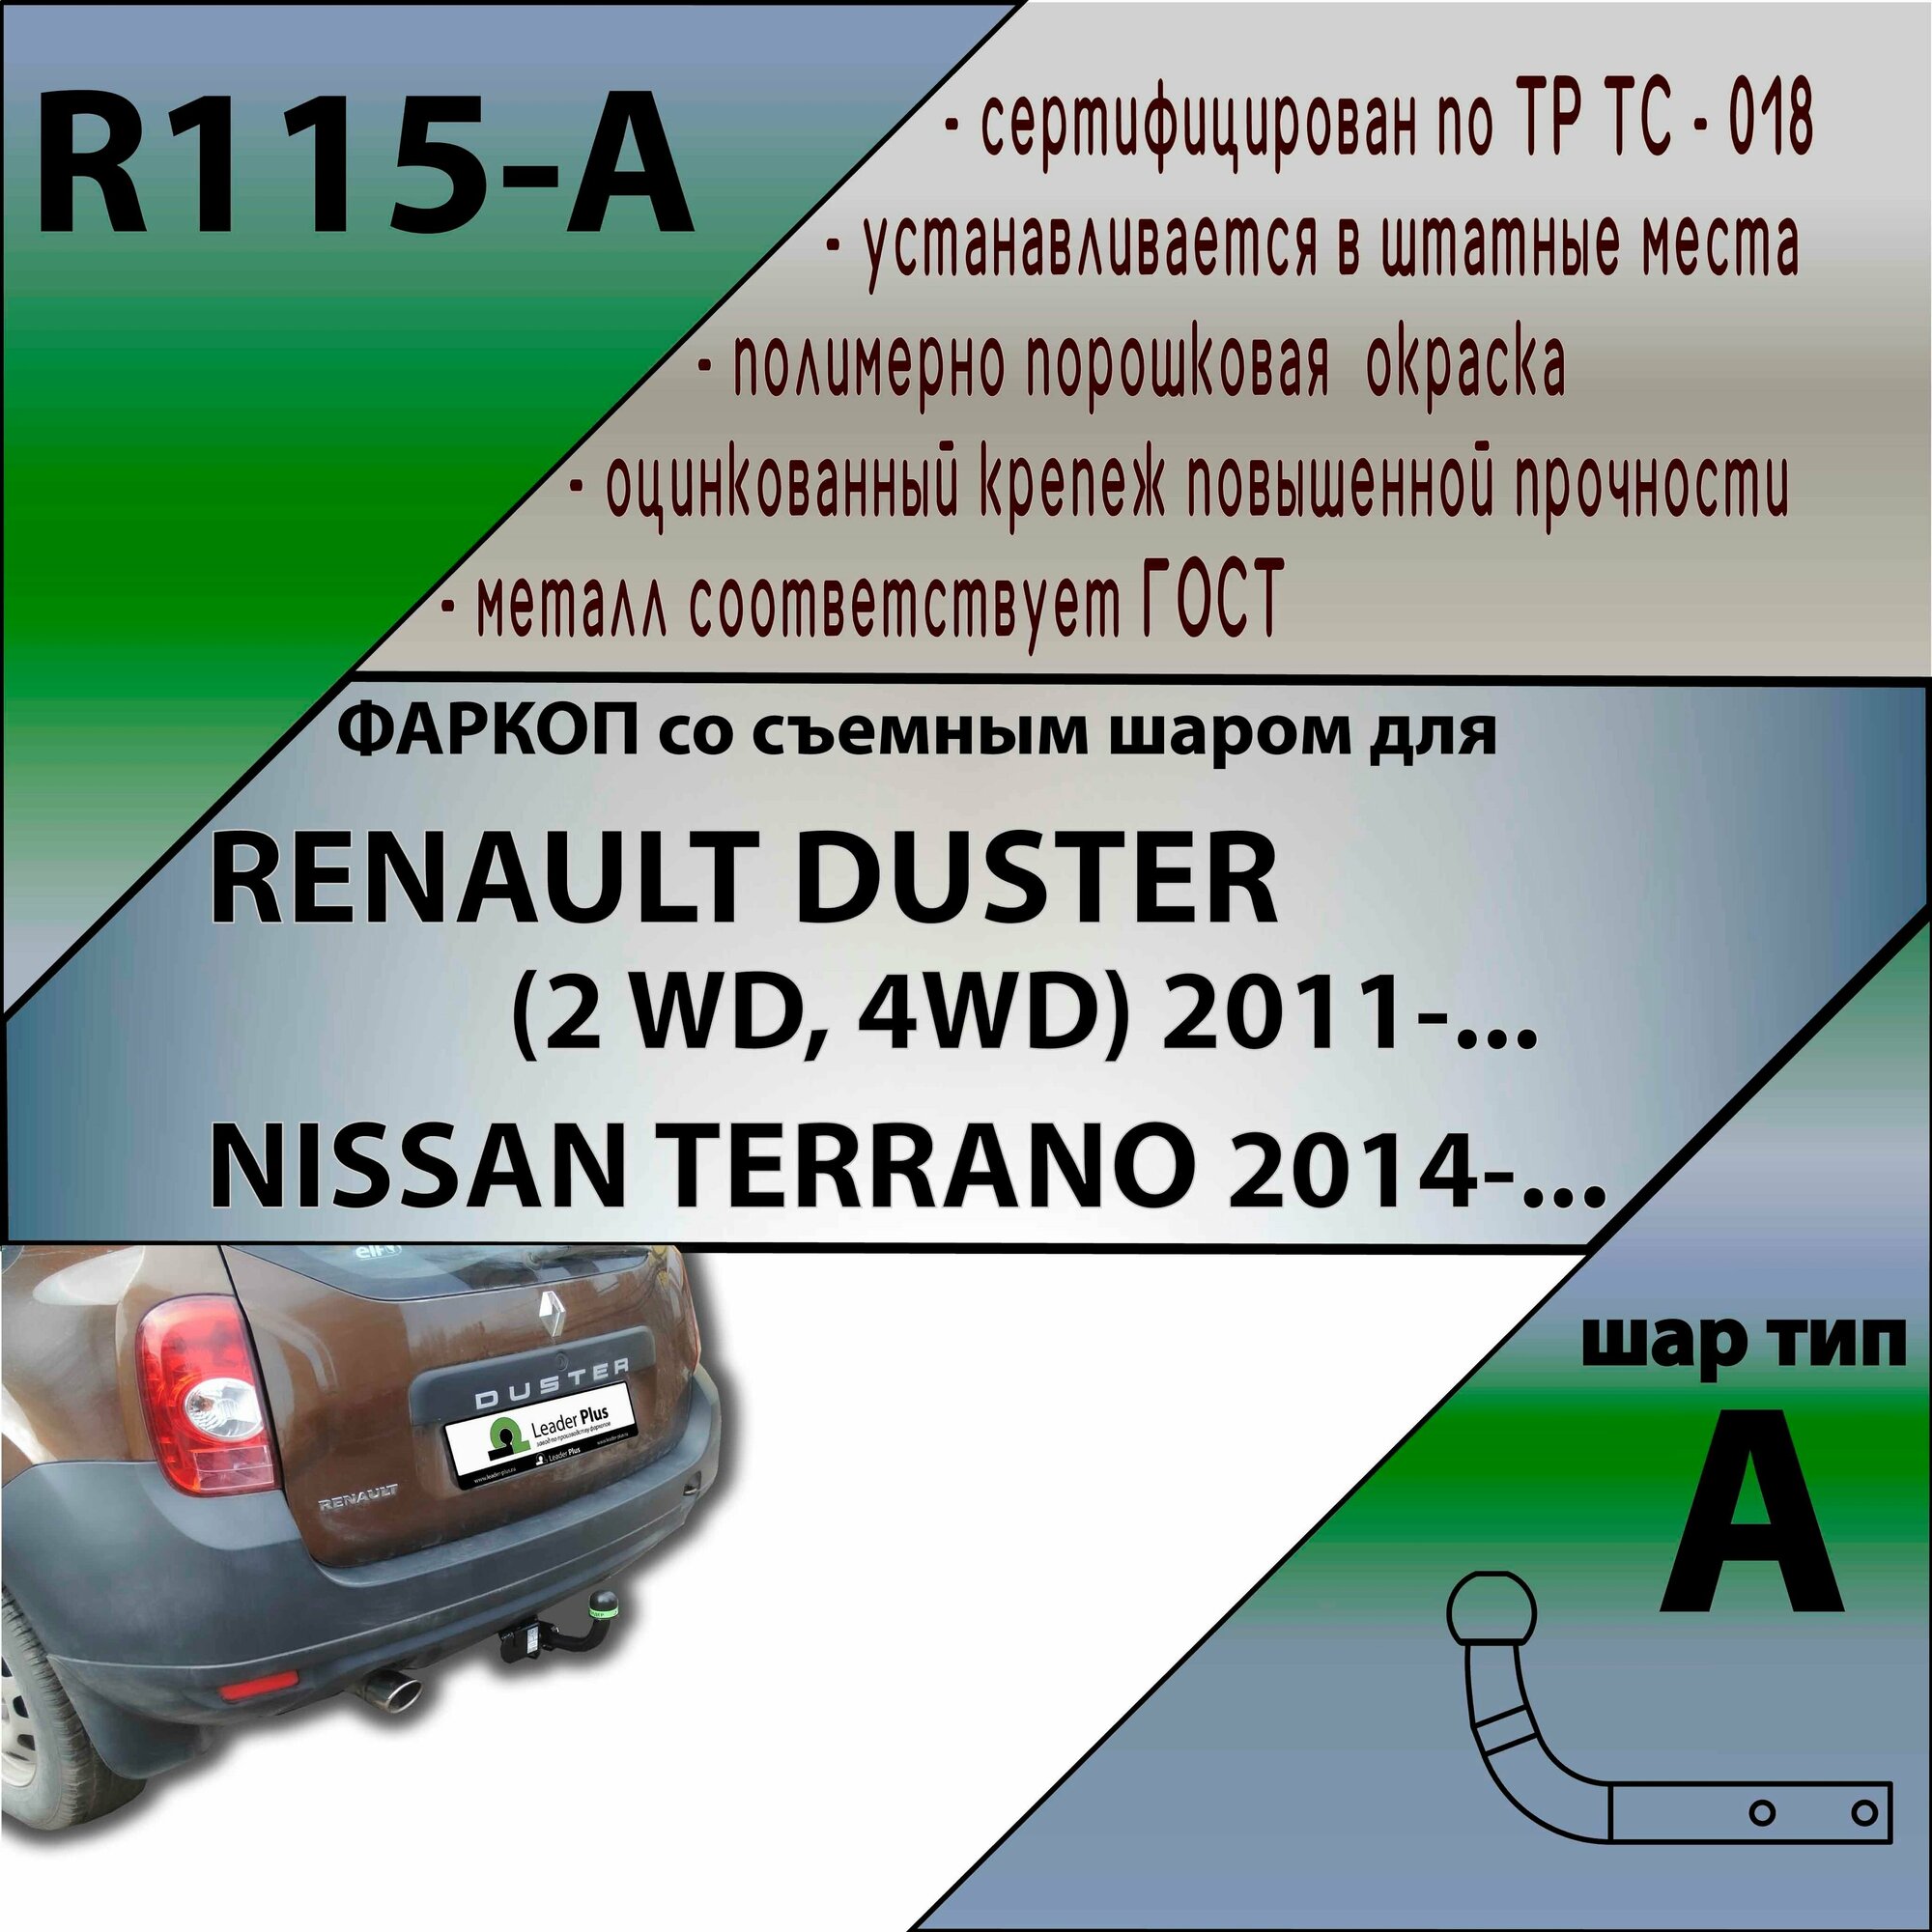 Фаркоп (ТСУ) Лидер Плюс для автомобиля Renault Duster 2010-2015 (Арт. R115-A)